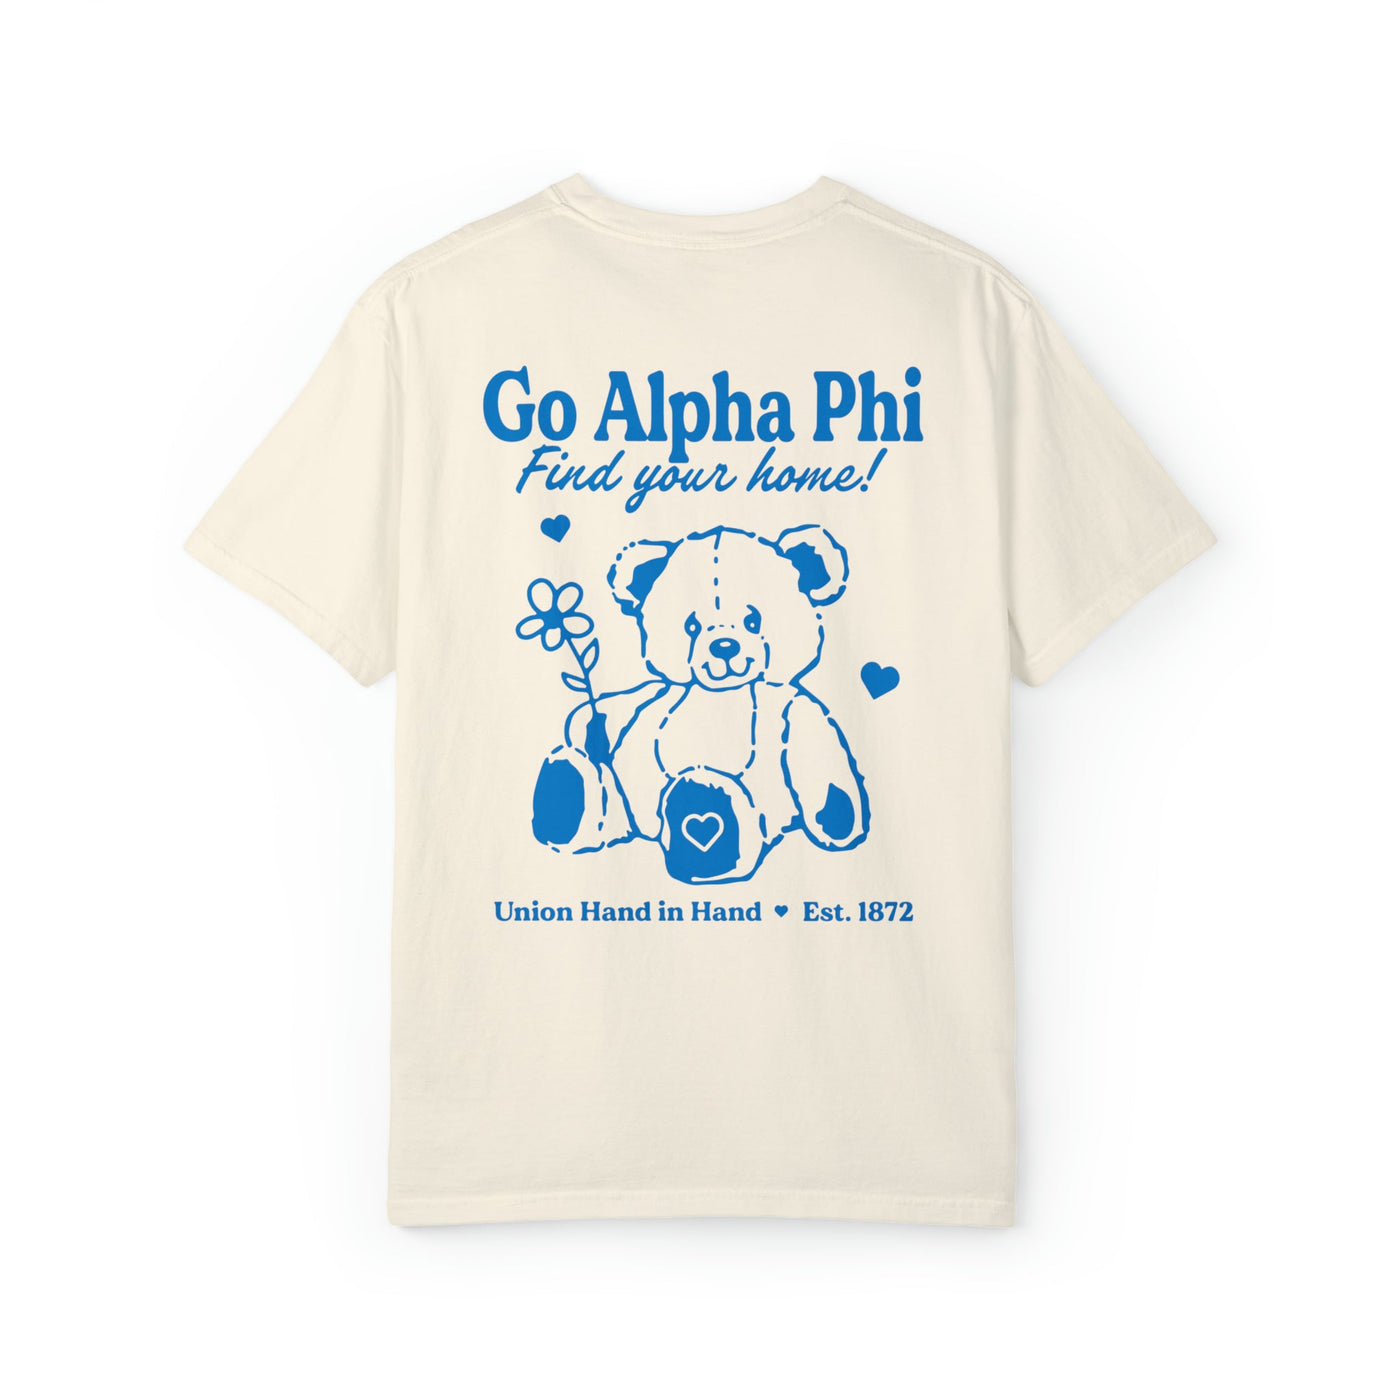 Alpha Phi Teddy Bear Sorority T-shirt